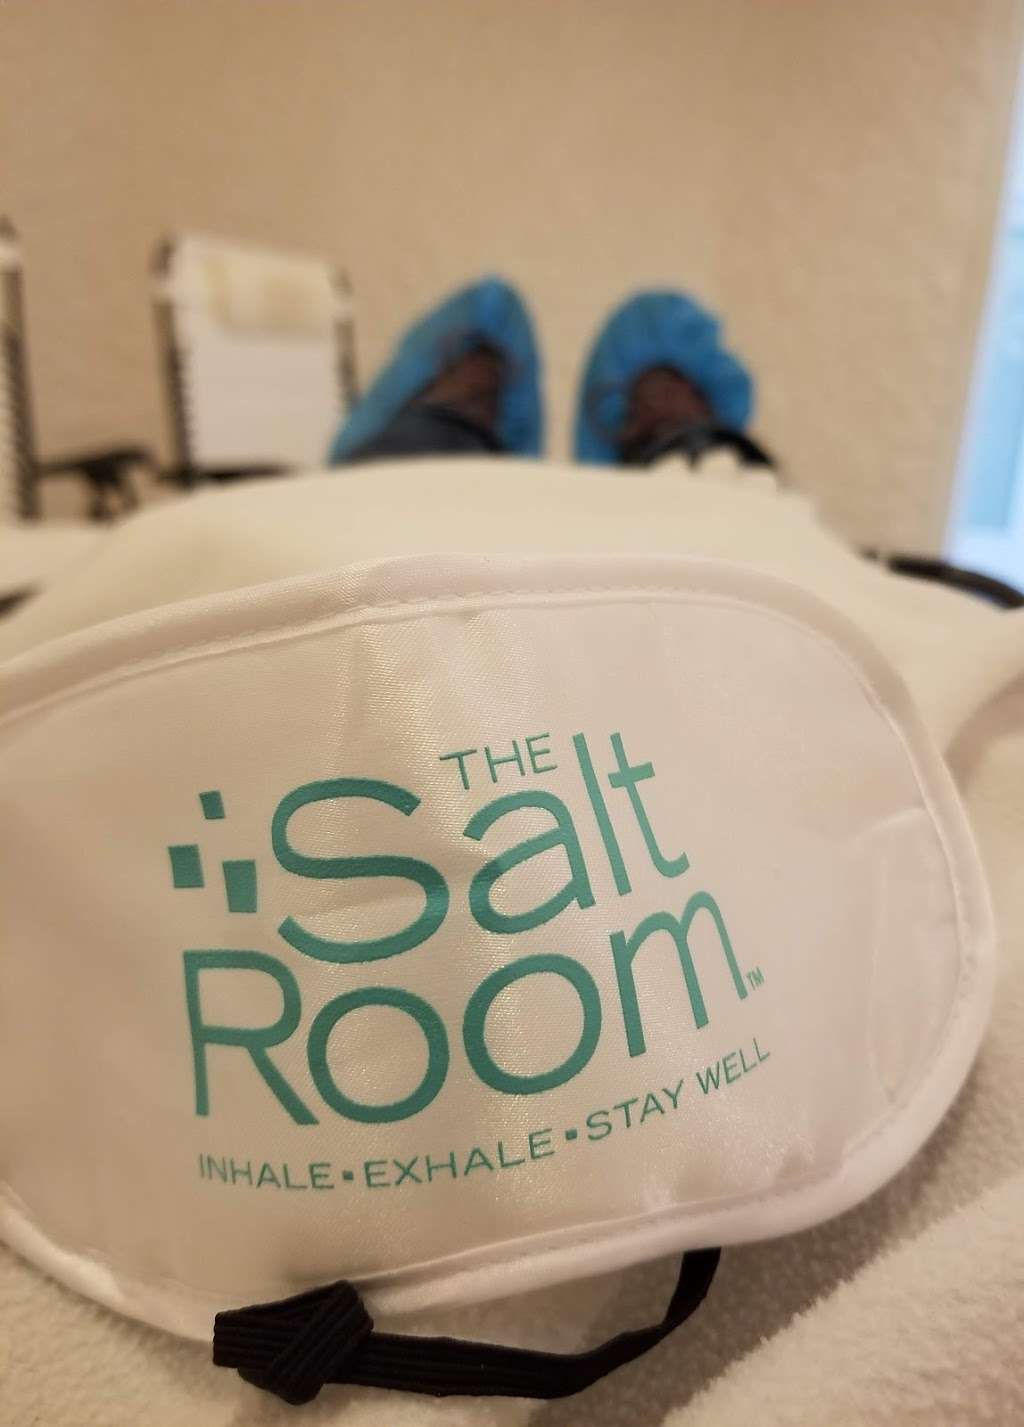 The Salt Room | 480 US-441, Lady Lake, FL 32159, USA | Phone: (352) 750-9909